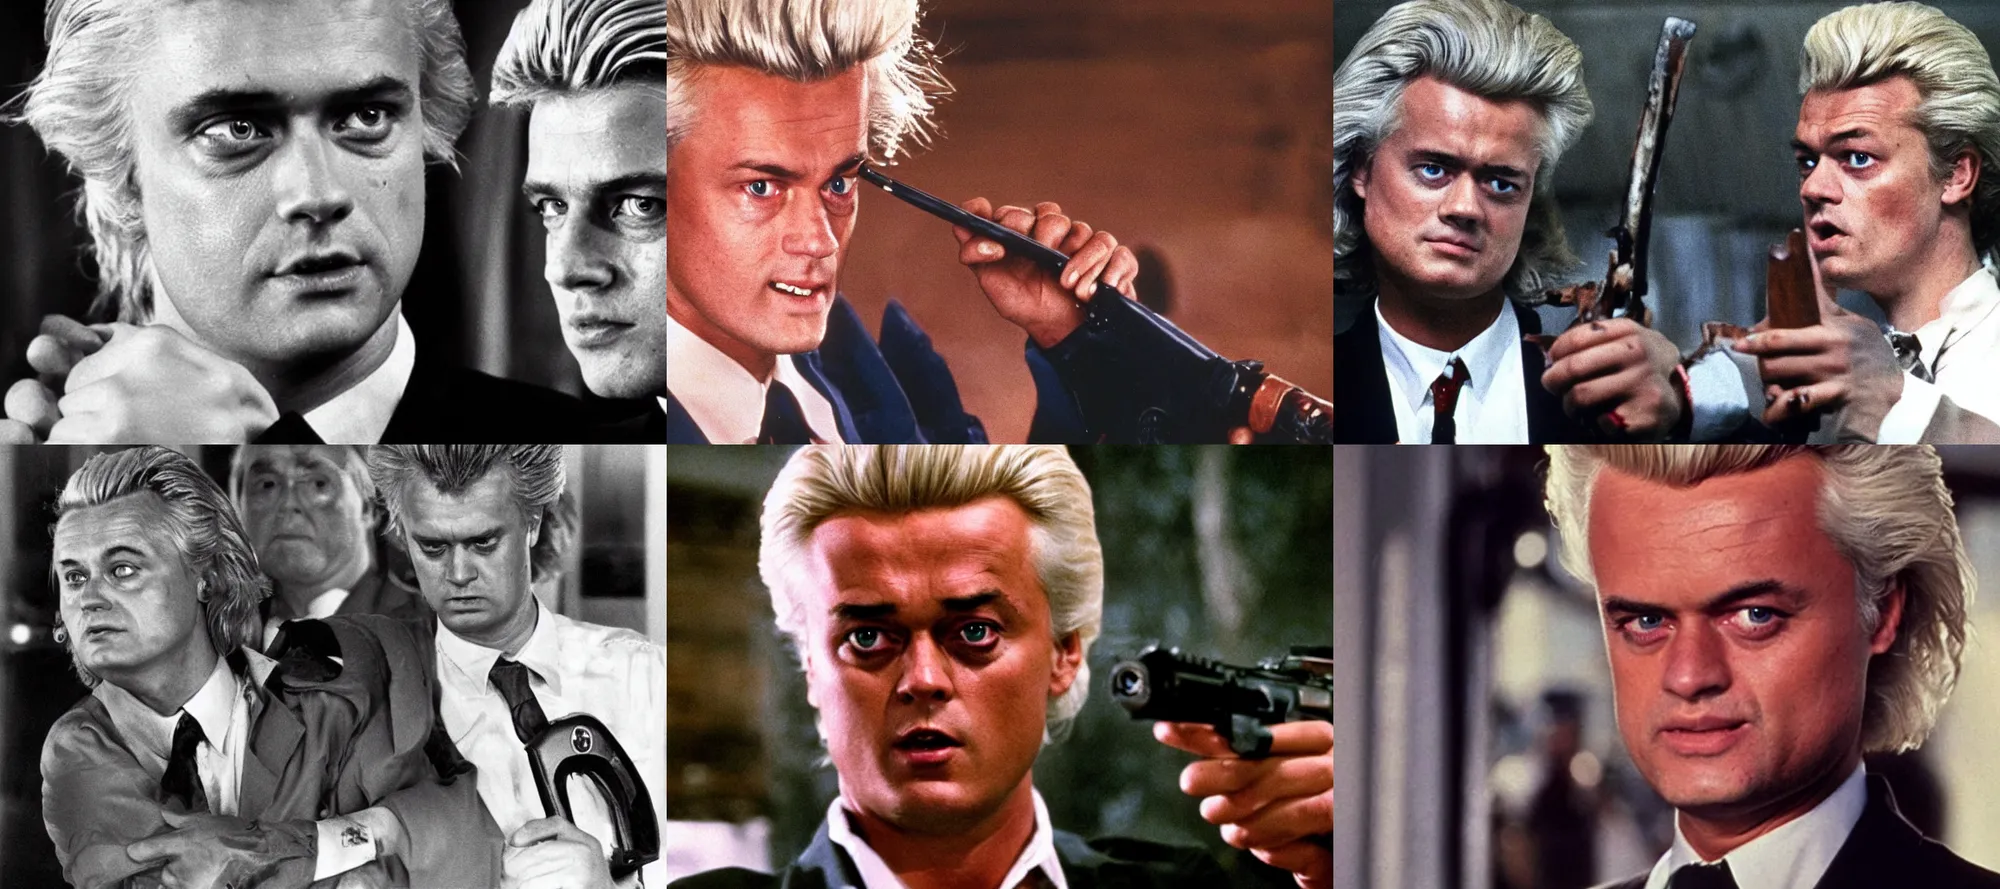 Prompt: Geert Wilders in the movie evil dead 2 1987